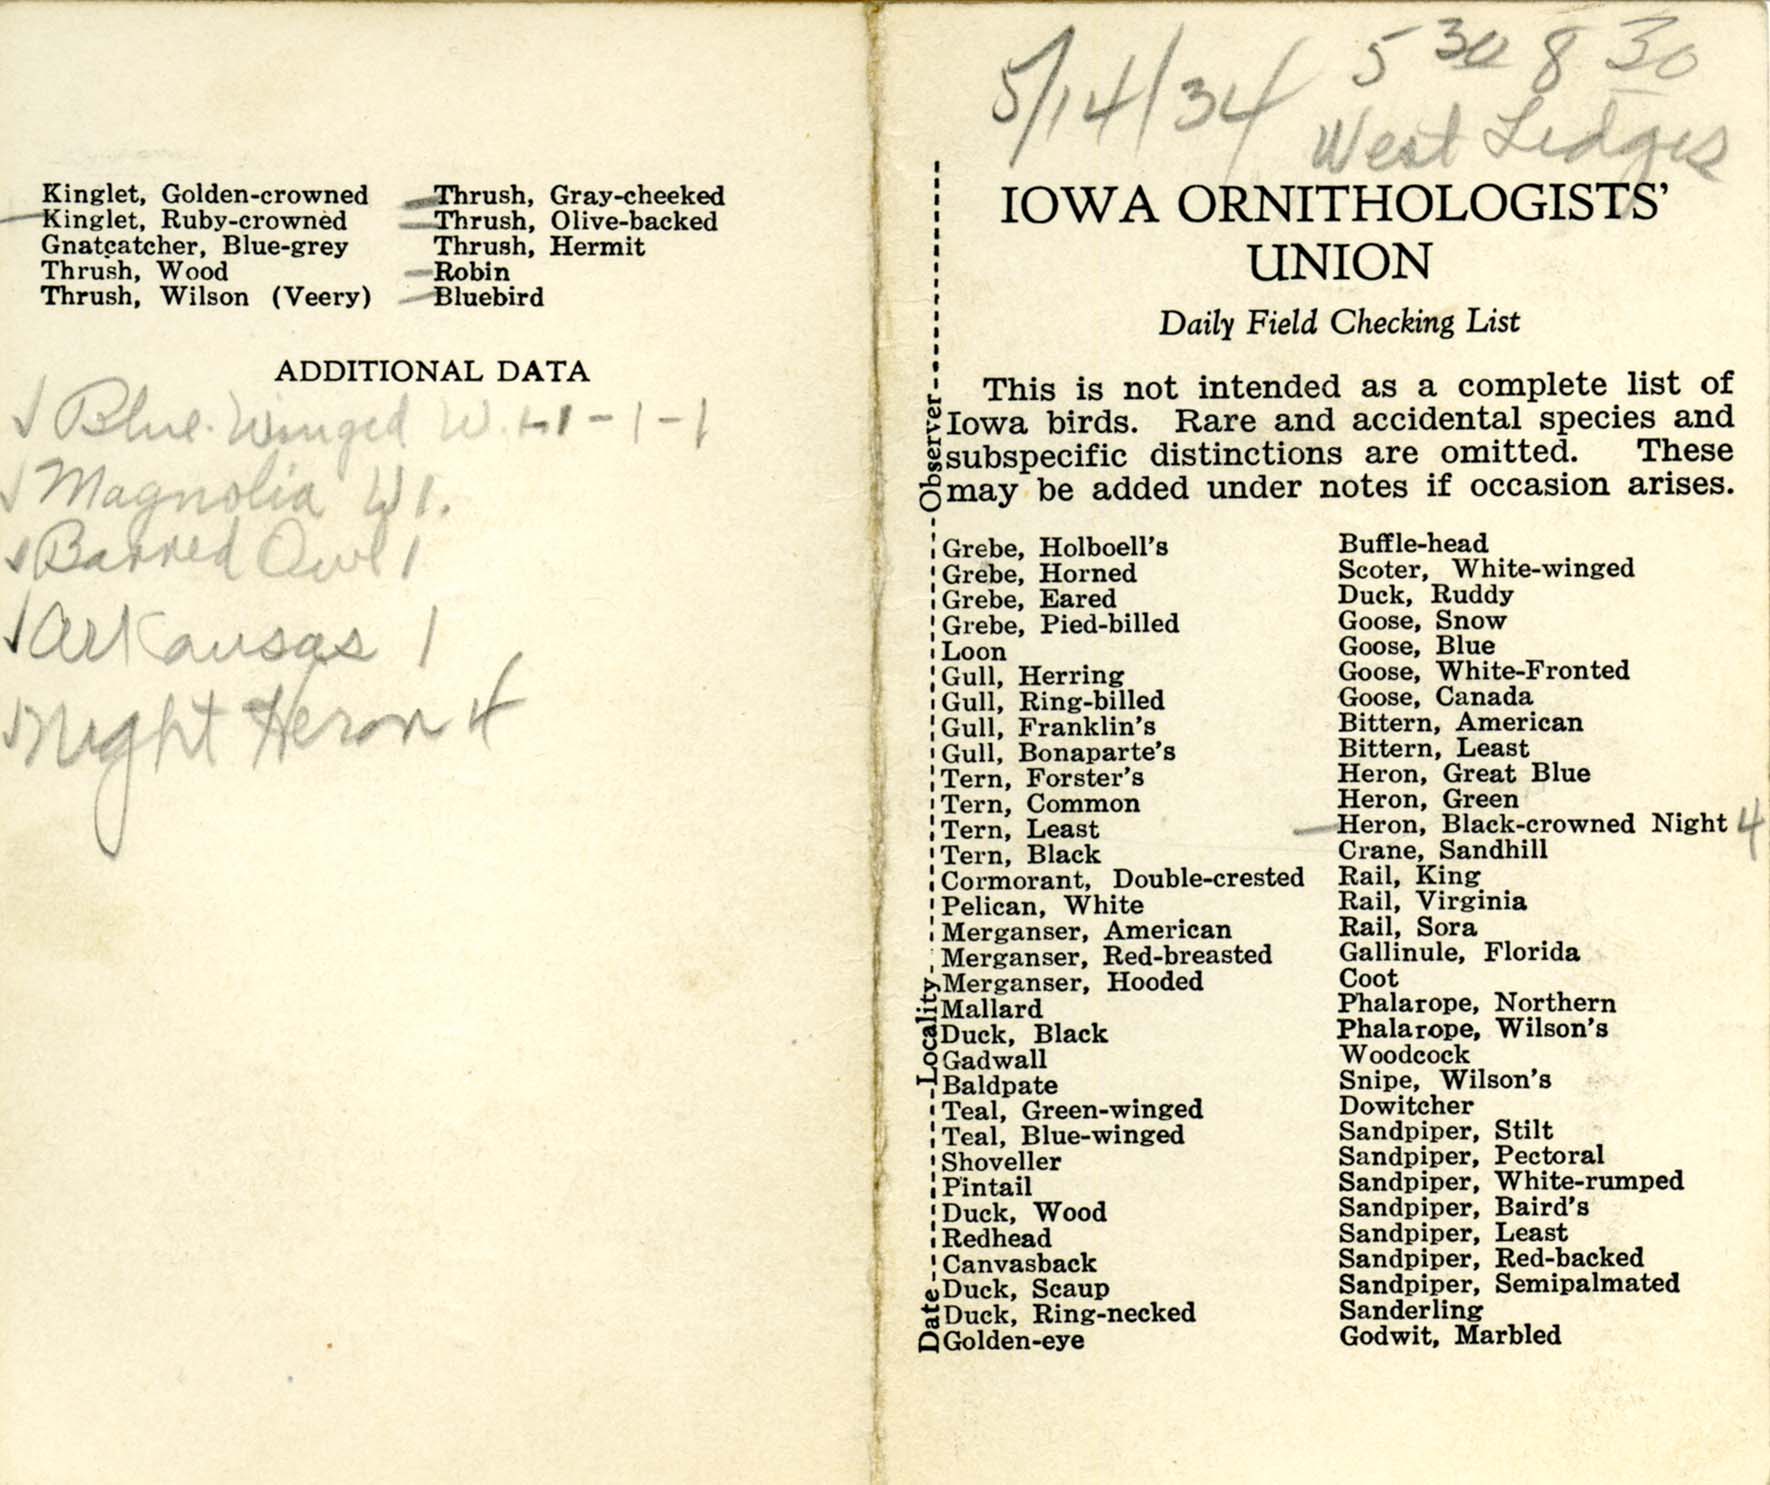 Daily field checking list, Walter Rosene, May 14, 1934